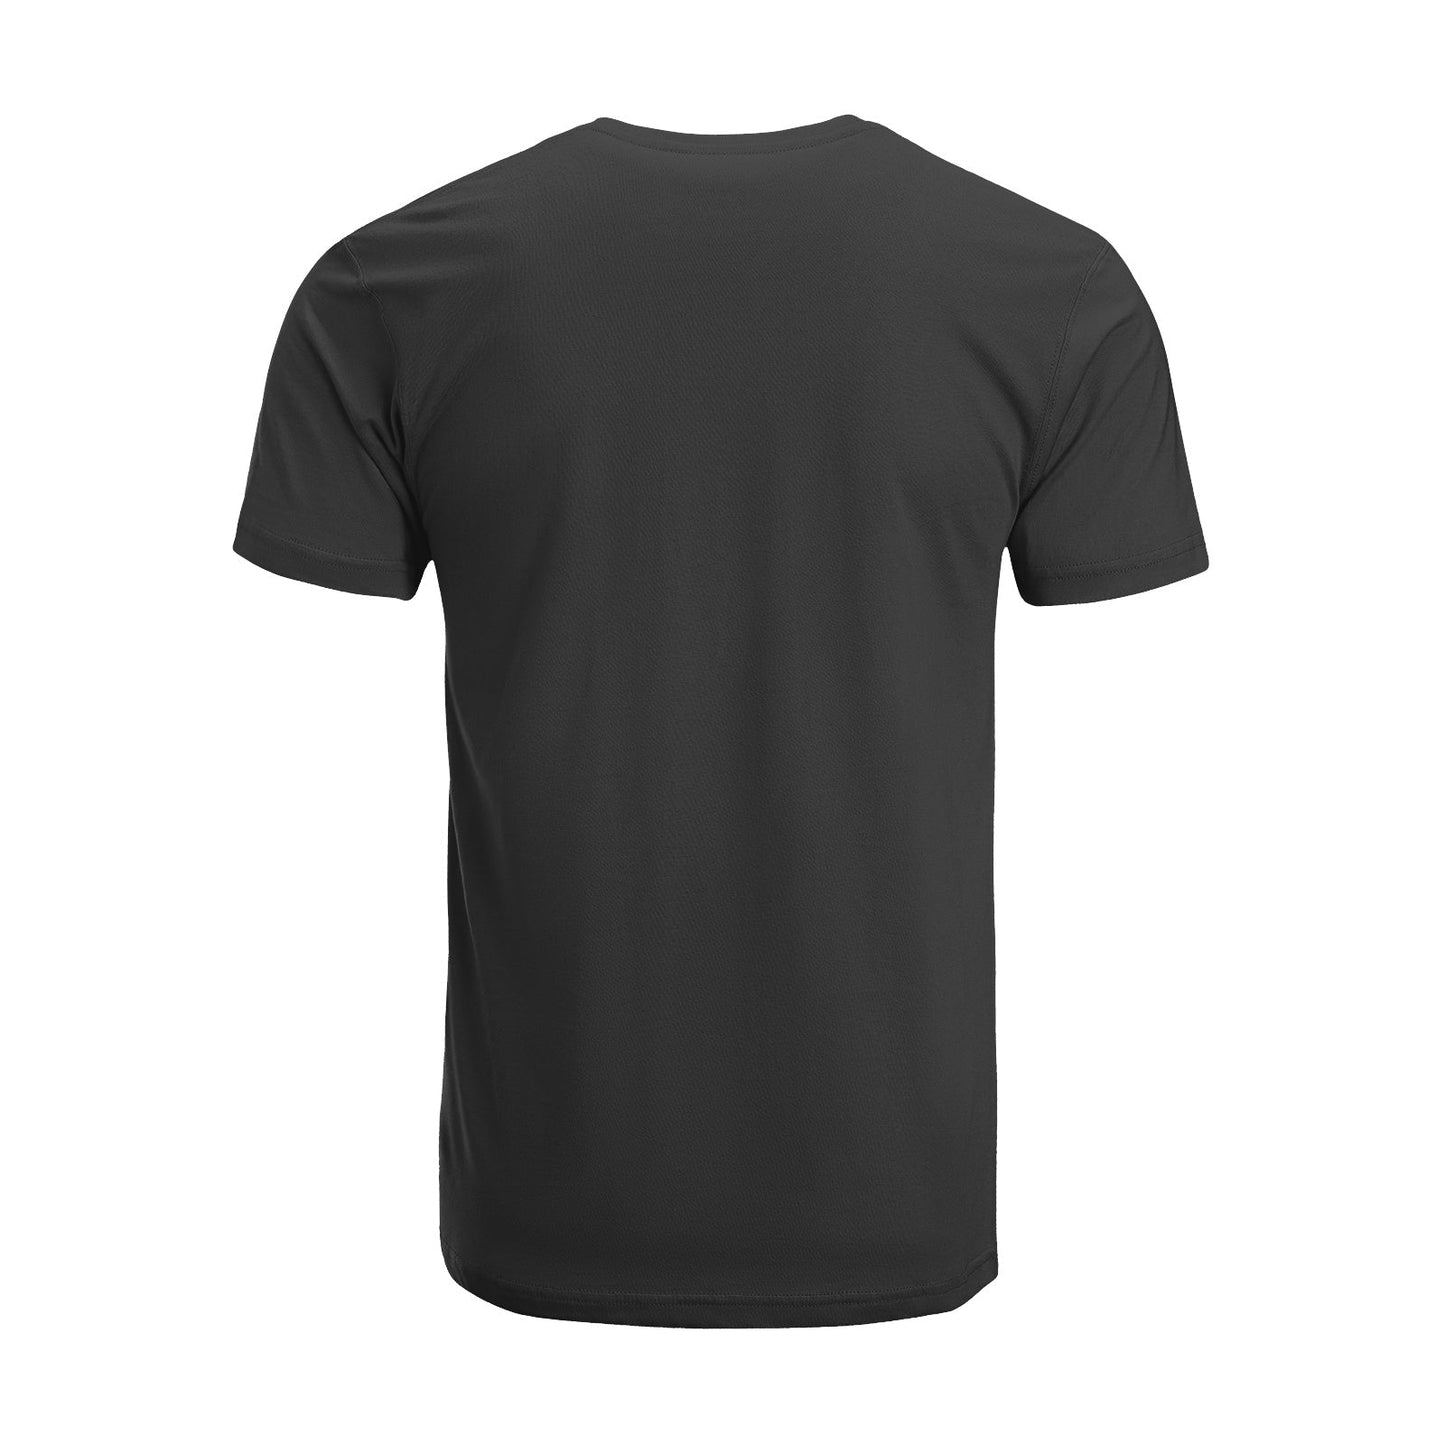 Unisex Short Sleeve Crew Neck Cotton Jersey T-Shirt Gym No. 06 - Tara-Outfits.com